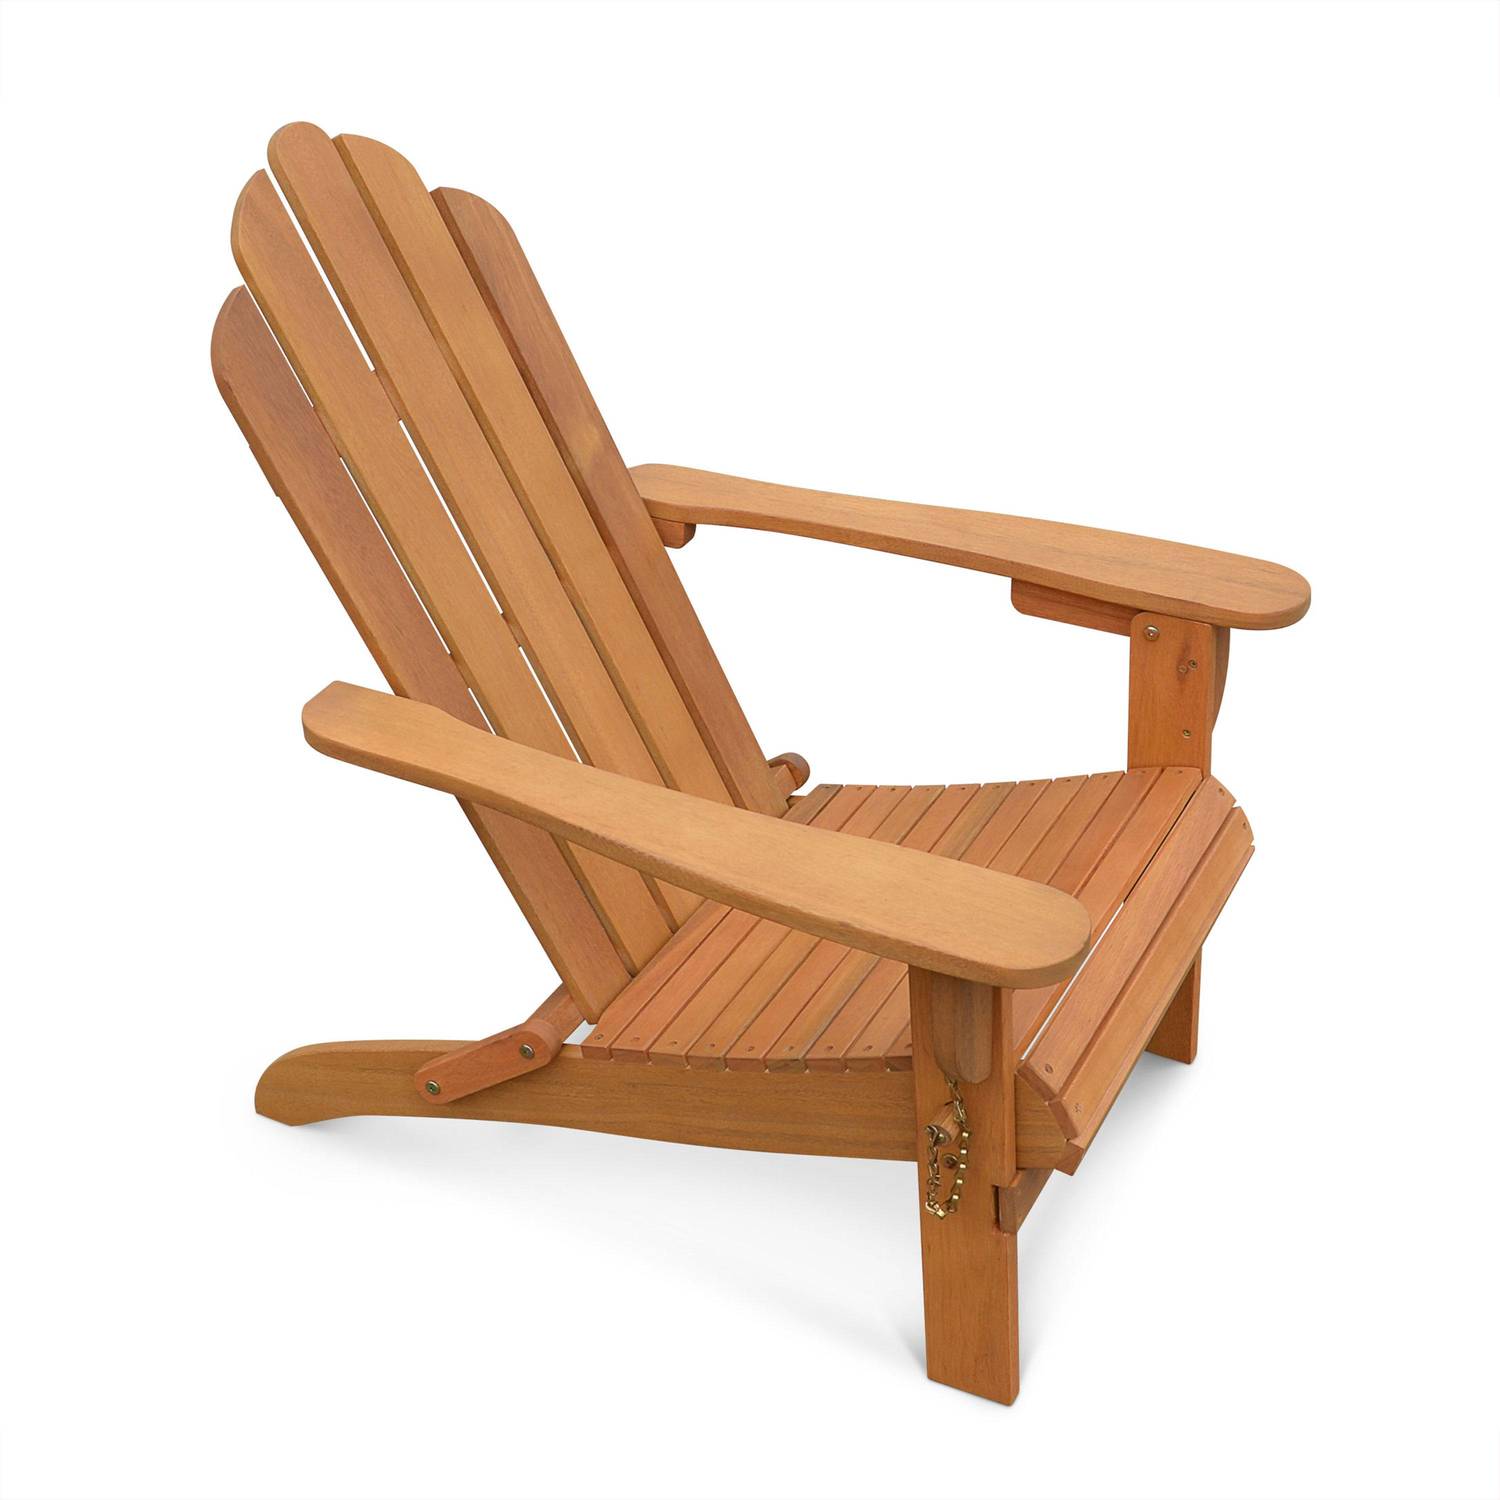 Foldable wooden eucalyptus retro garden armchair - Adirondack Salamanca - Natural wood colour Photo1